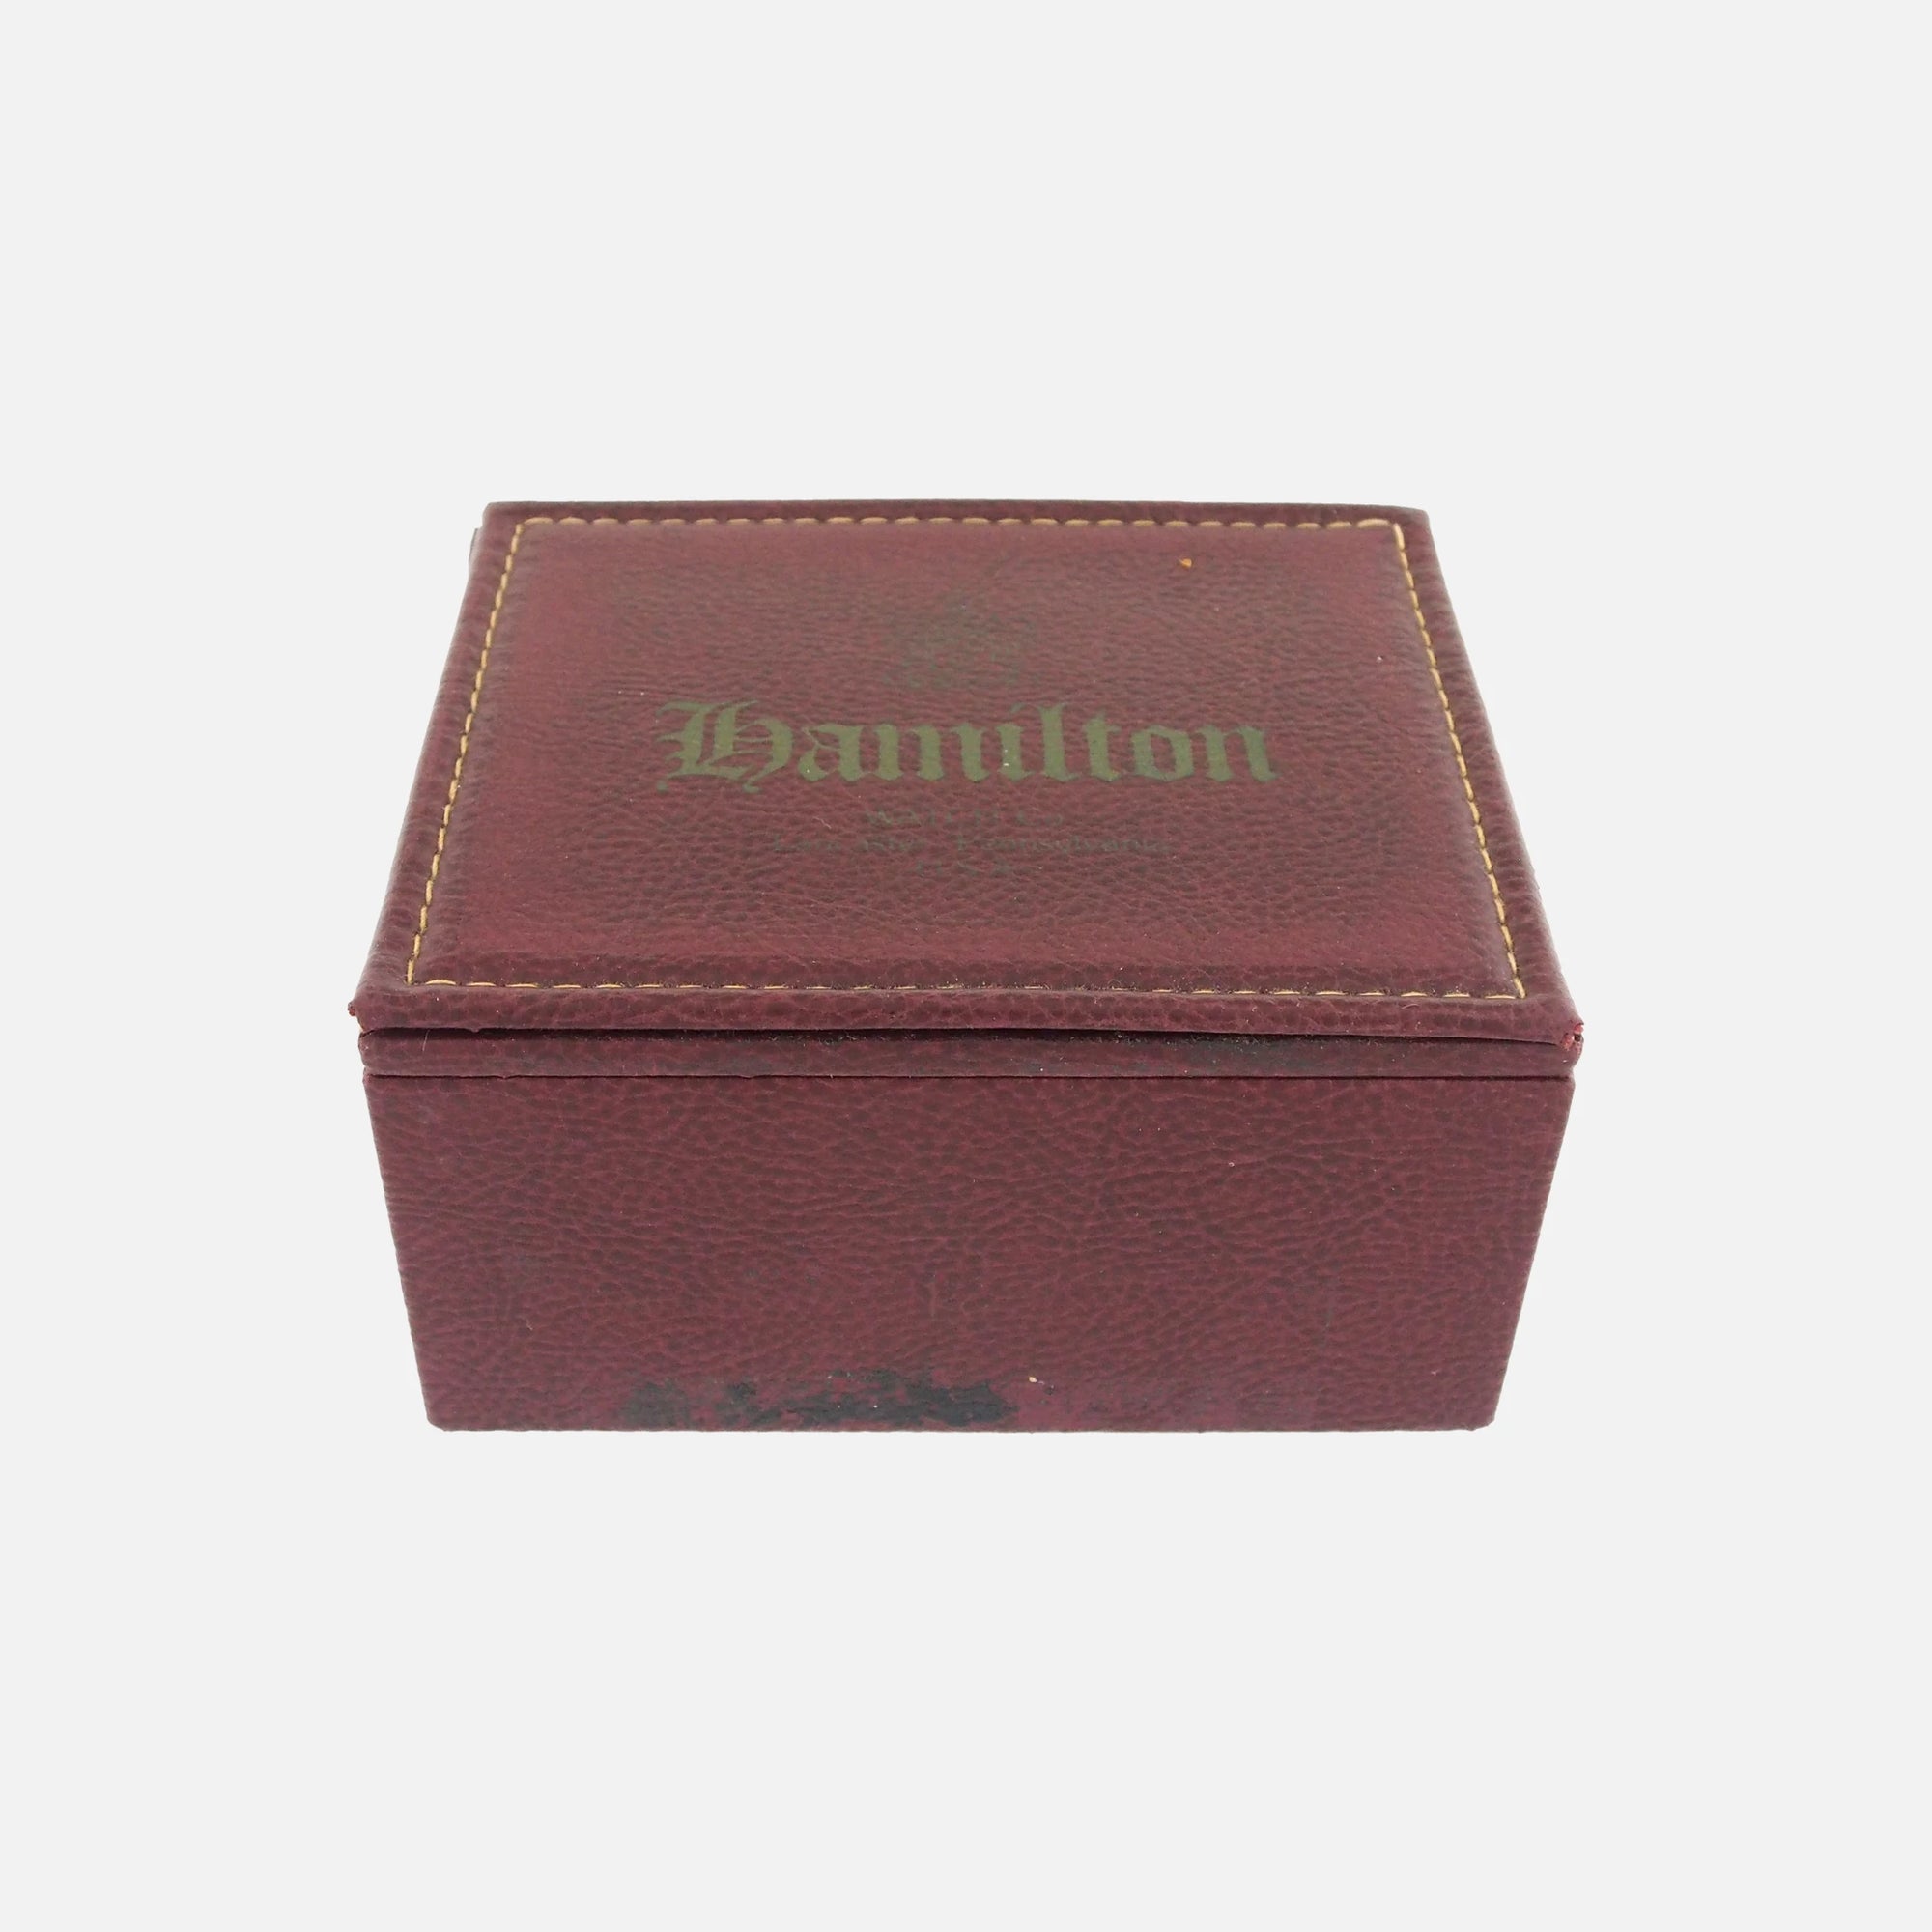 1950s - 1960s Hamilton Vintage Watch Box for sale - Vintage Watch Leader